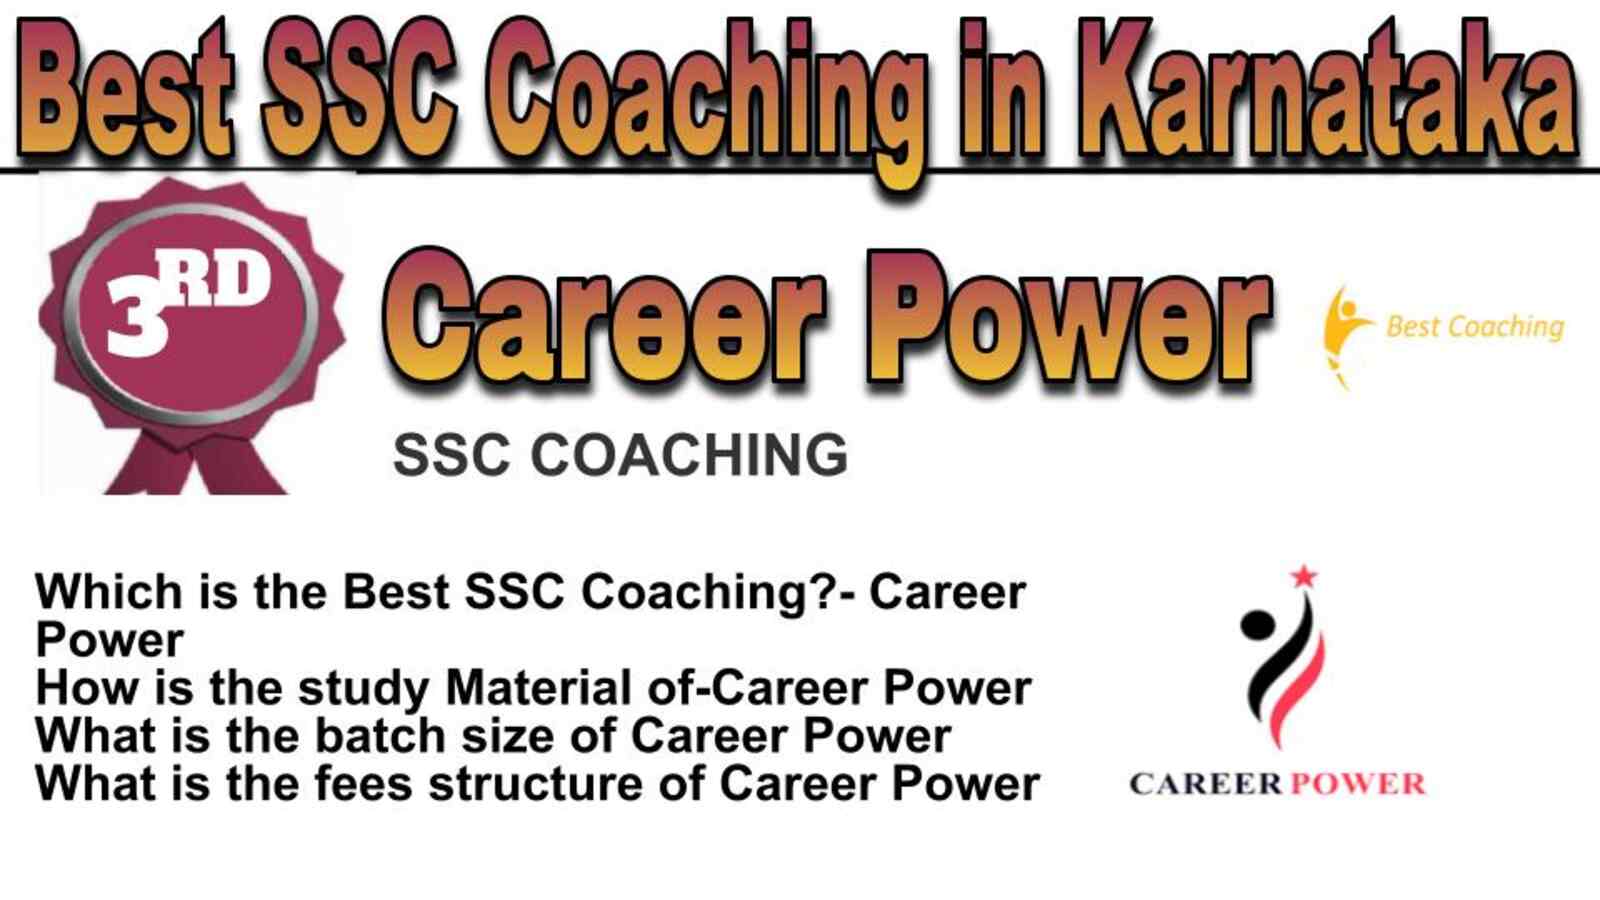 Rank 3 best SSC coaching in Karnataka